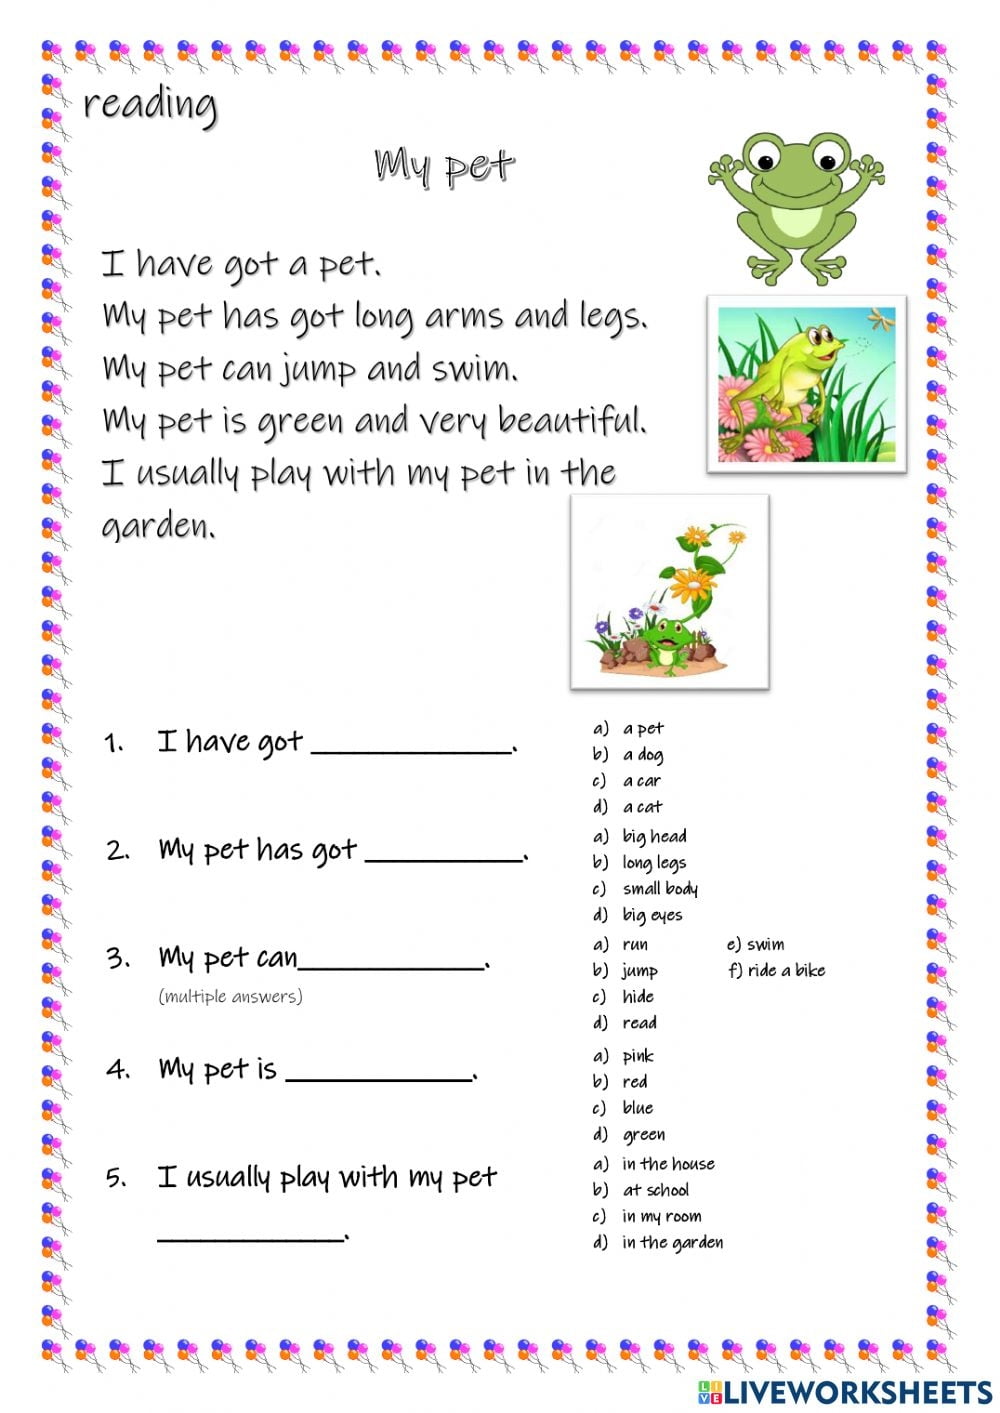 Reading Comprehension Printable Worksheets On Pets